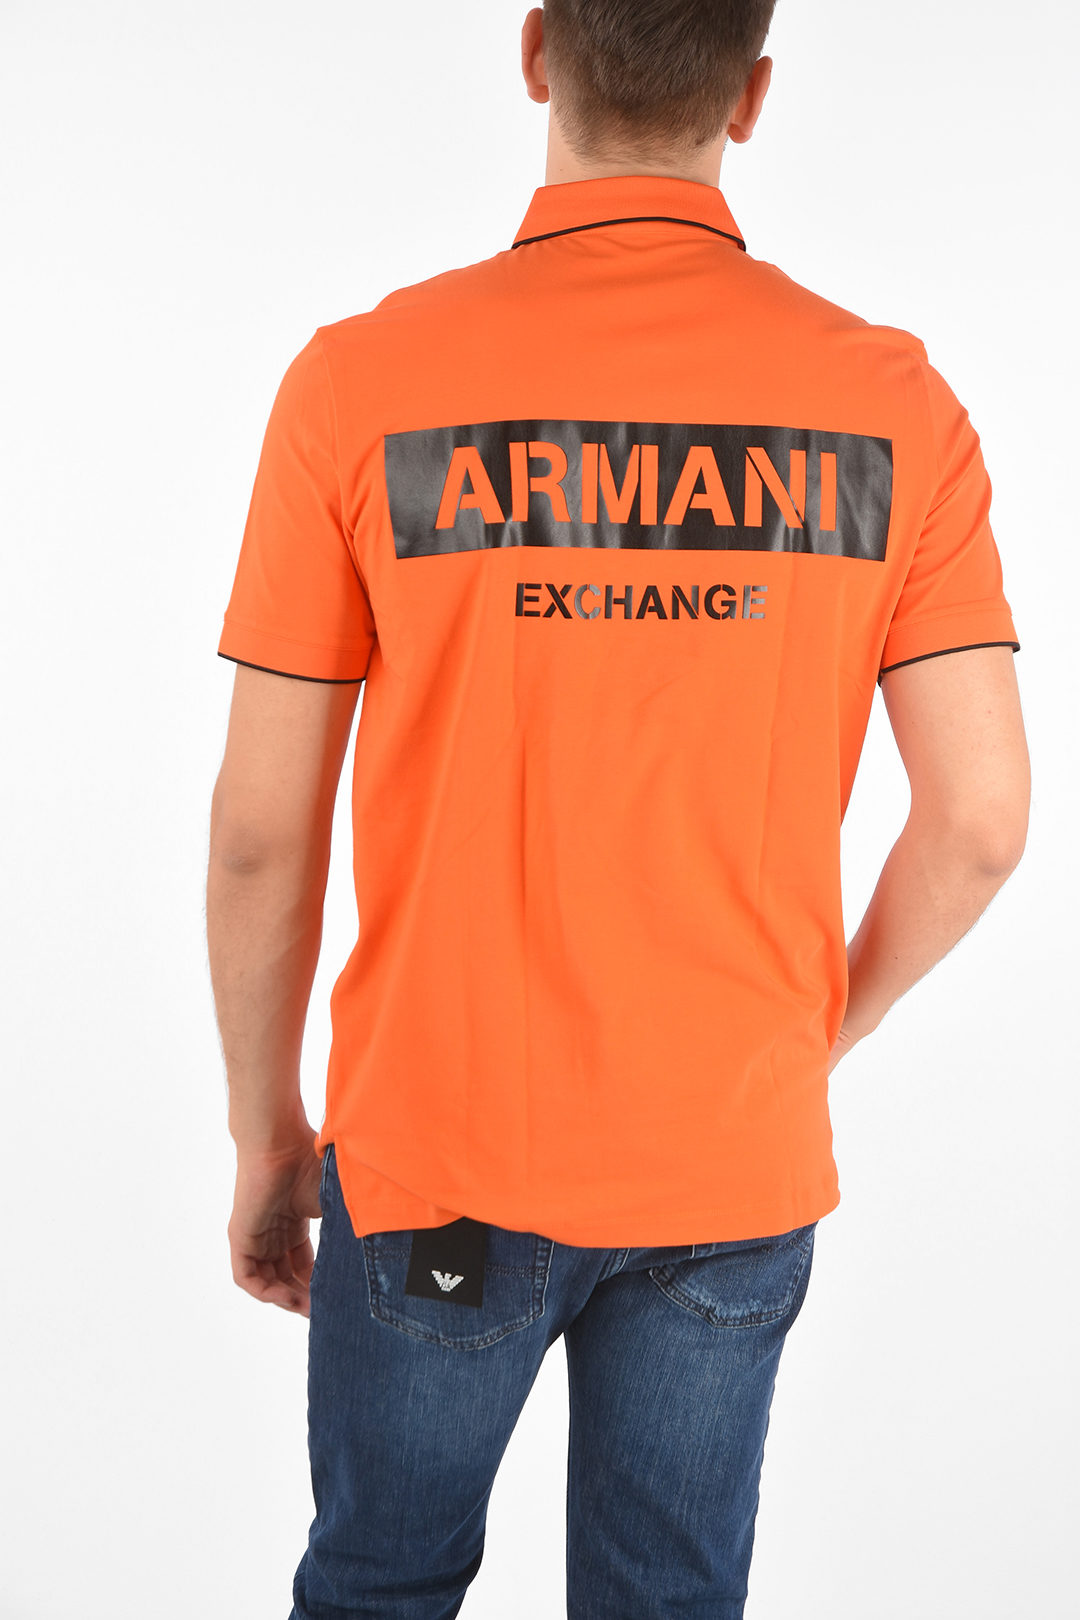 Armani ARMANI EXCHANGE back print polo shirt men - Glamood Outlet